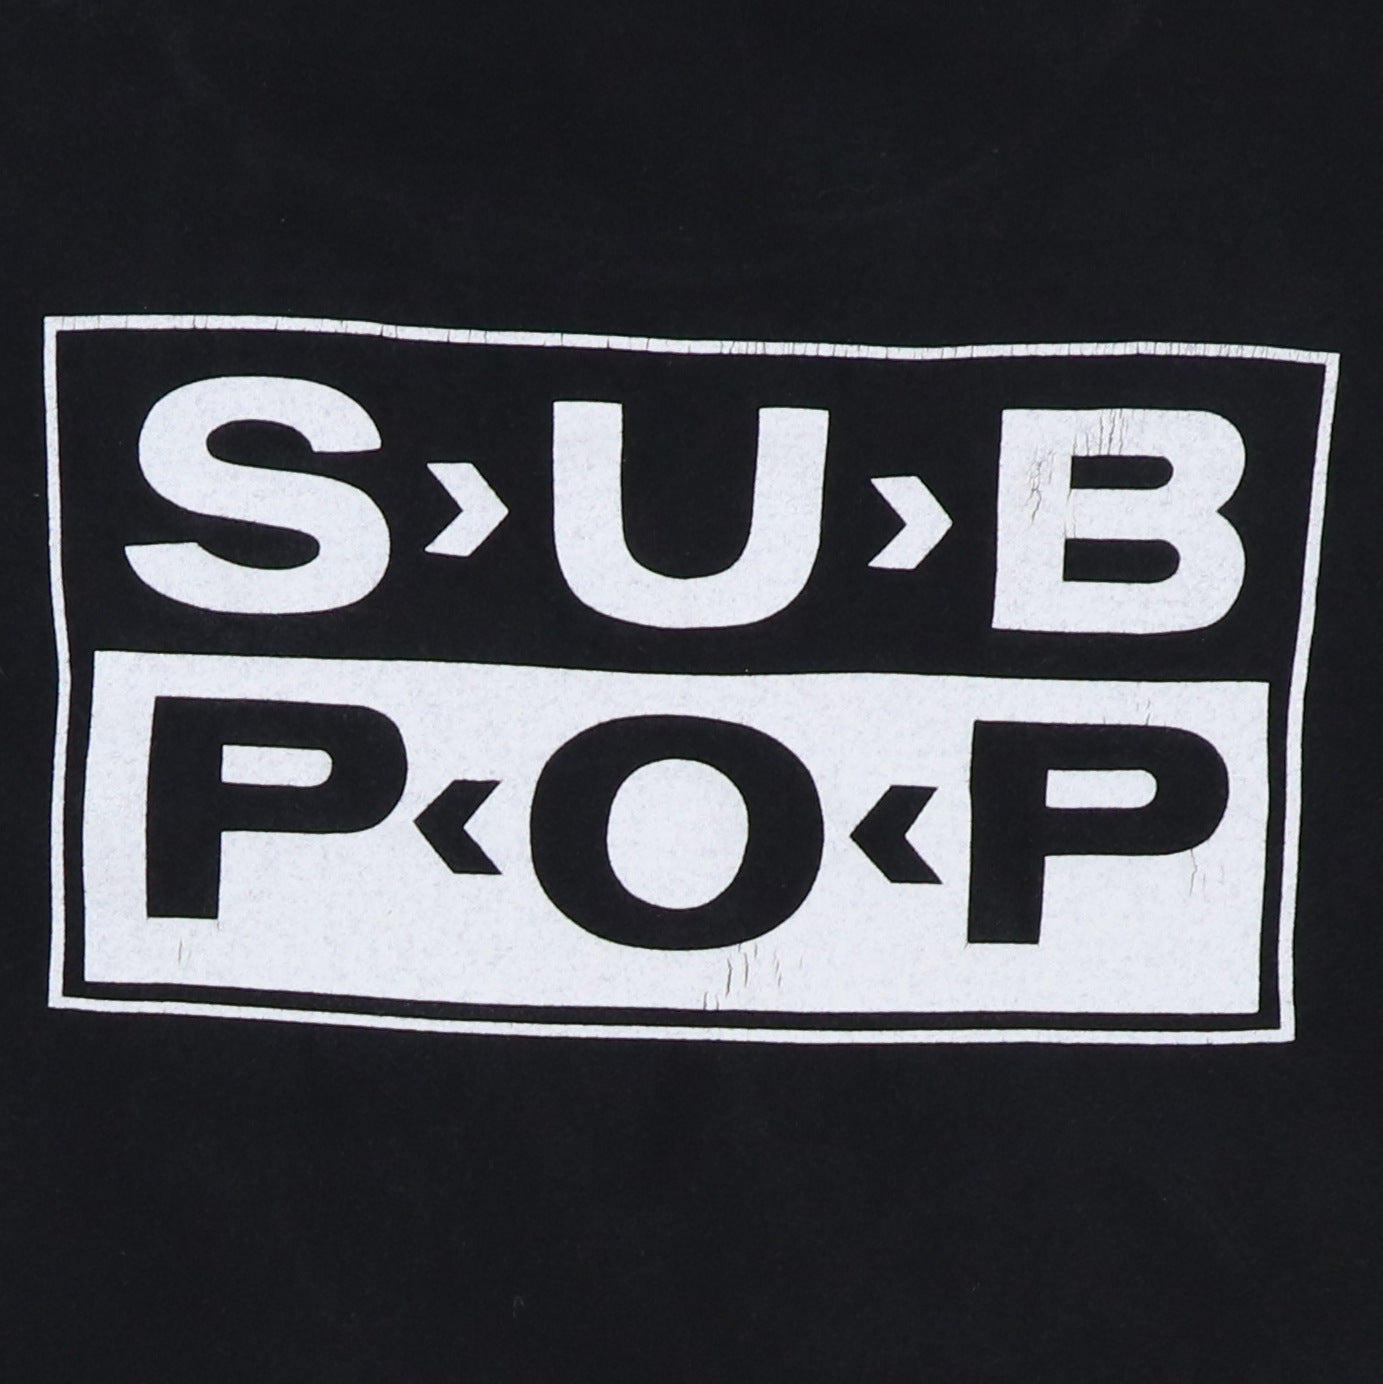 1990s Loser Sub Pop Records Shirt